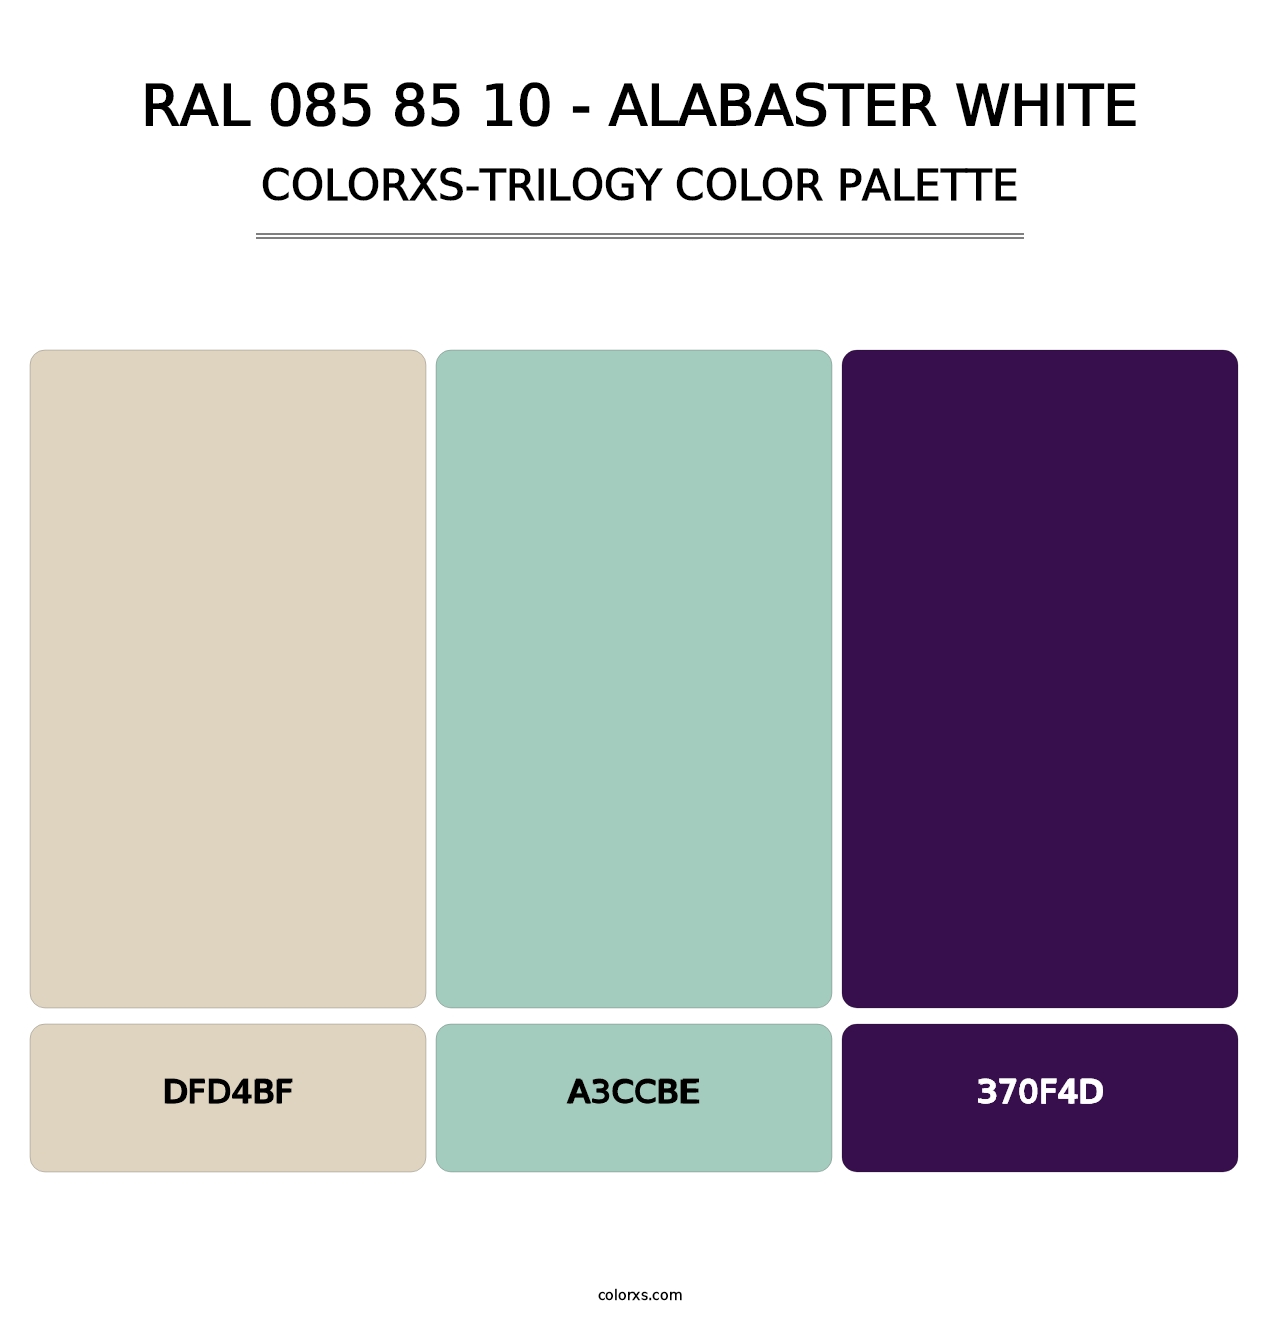 RAL 085 85 10 - Alabaster White - Colorxs Trilogy Palette